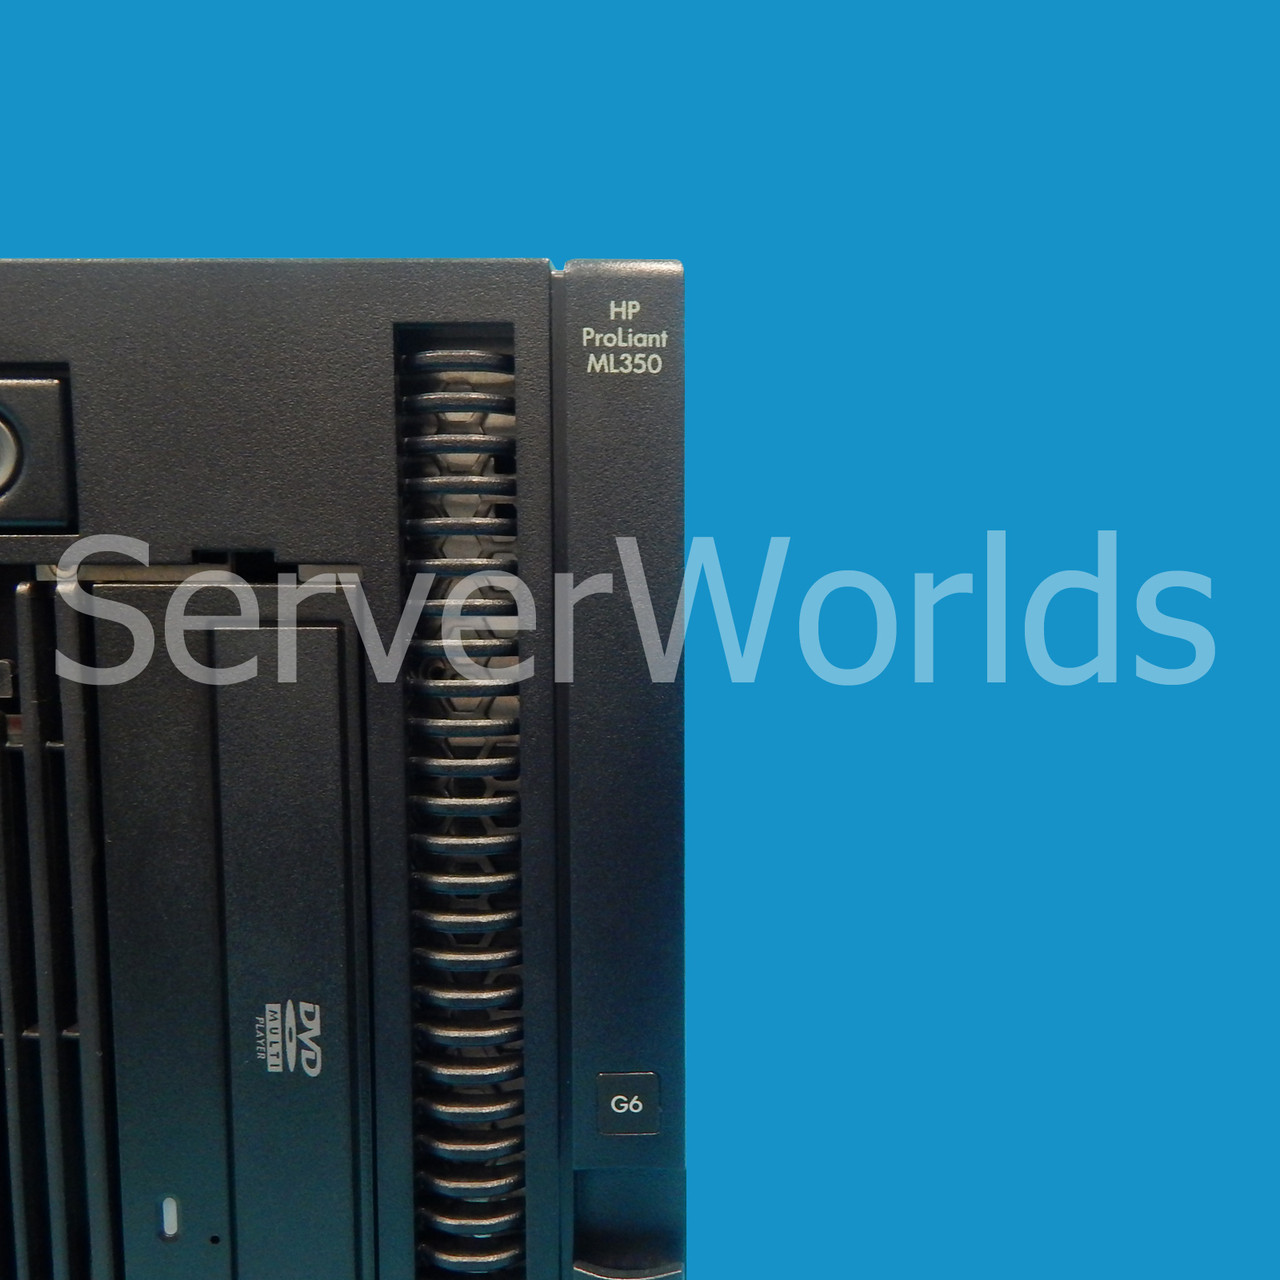 Dual Power Supplies p410i 3GB RAM Proliant DL380 G6 Server 1 x L5520 QC